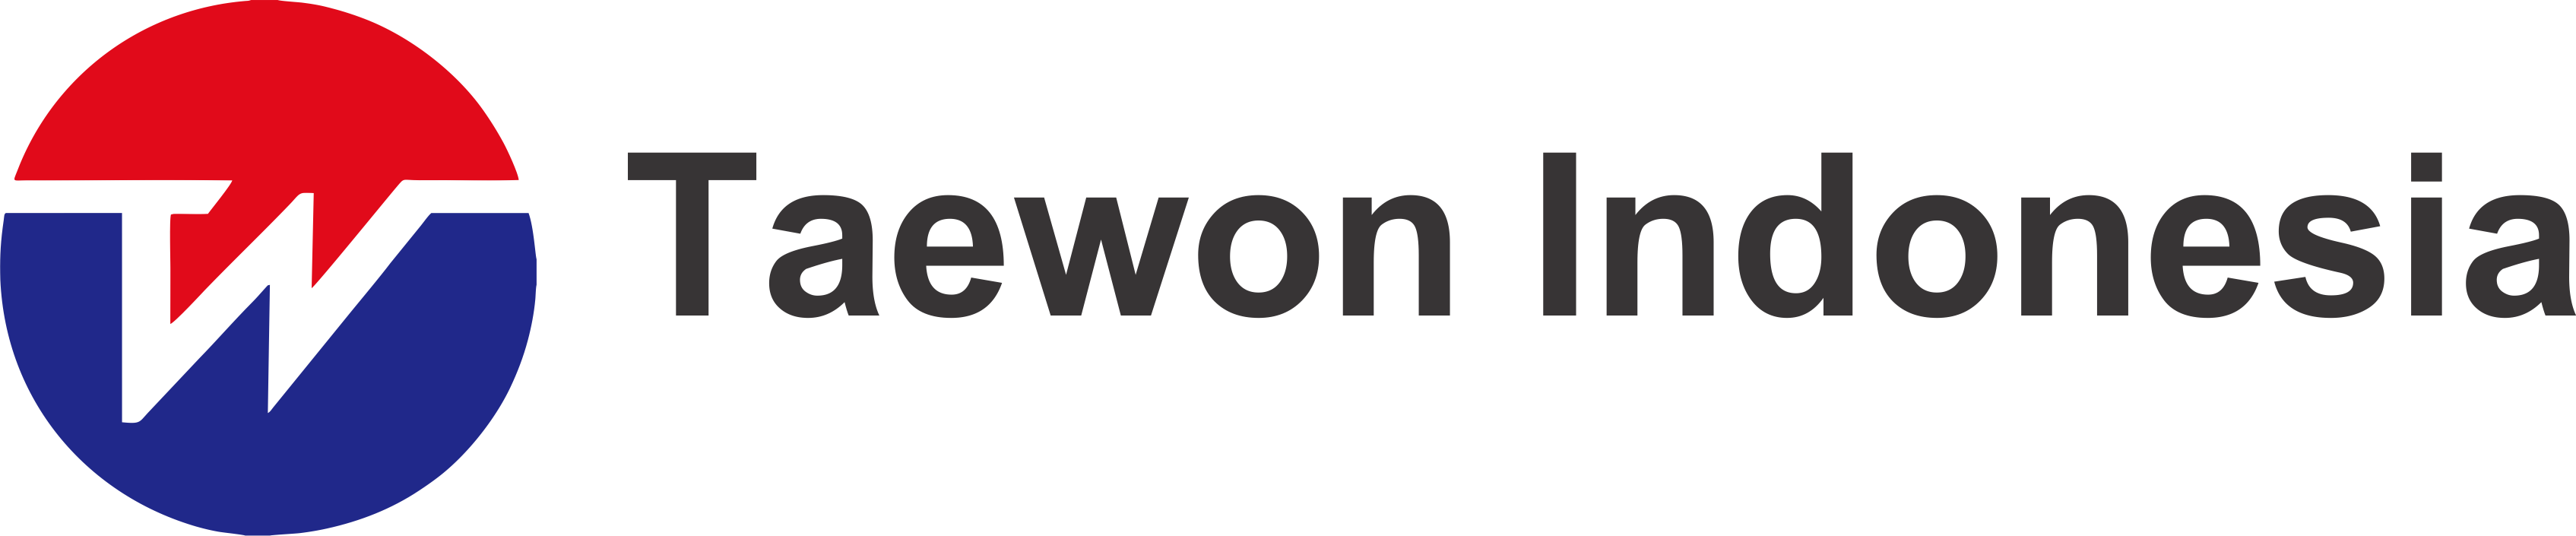 PT-Taewon-Indonesia-logo